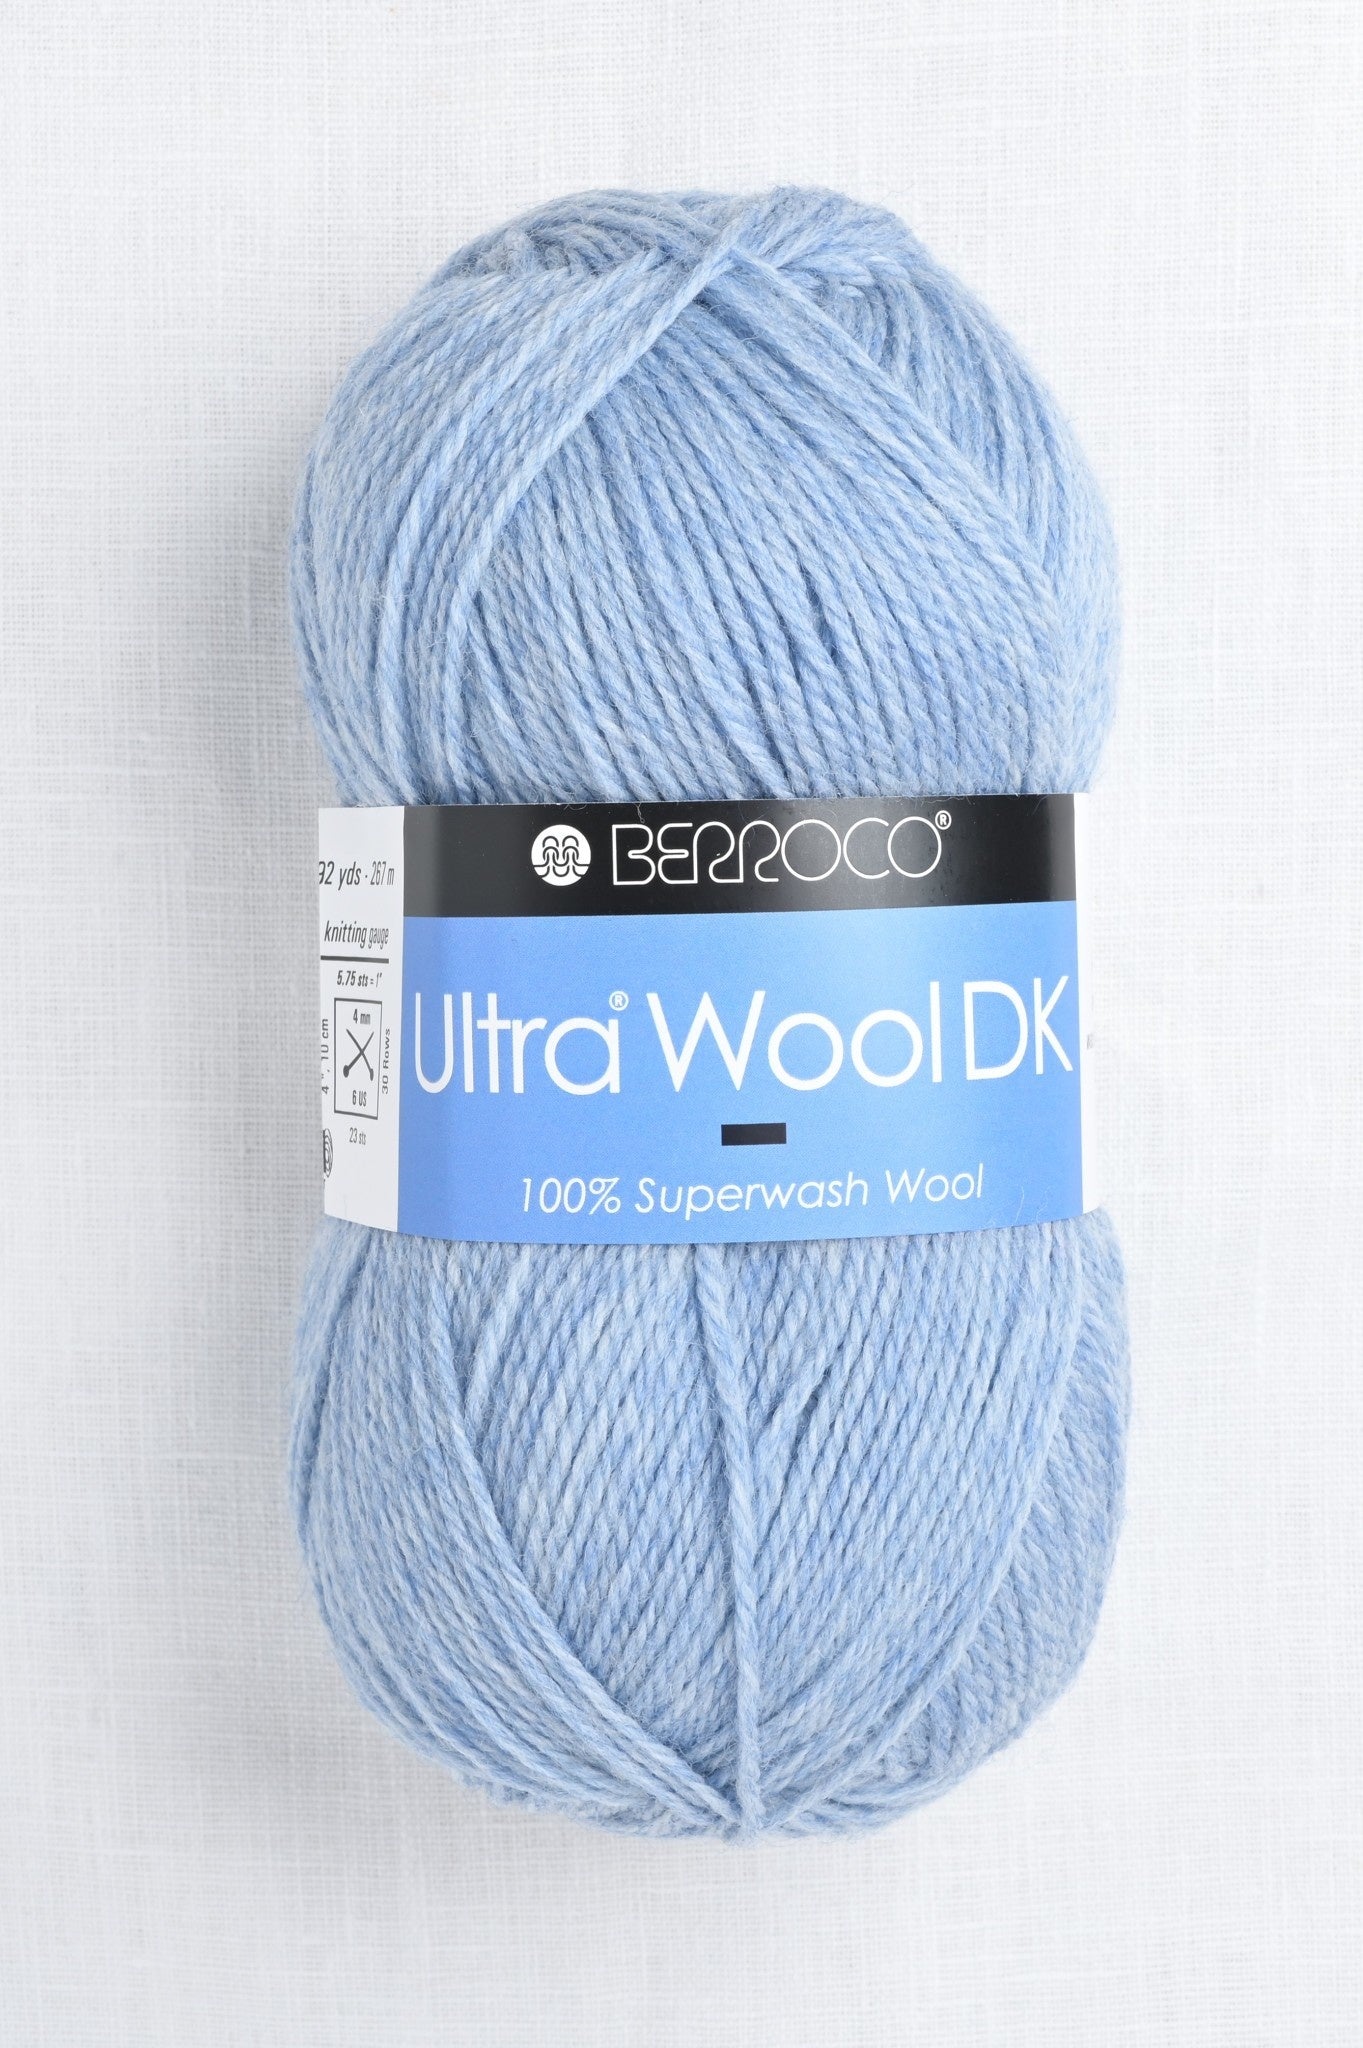 Berroco; Ultra Wool DK; forget me knot 83162